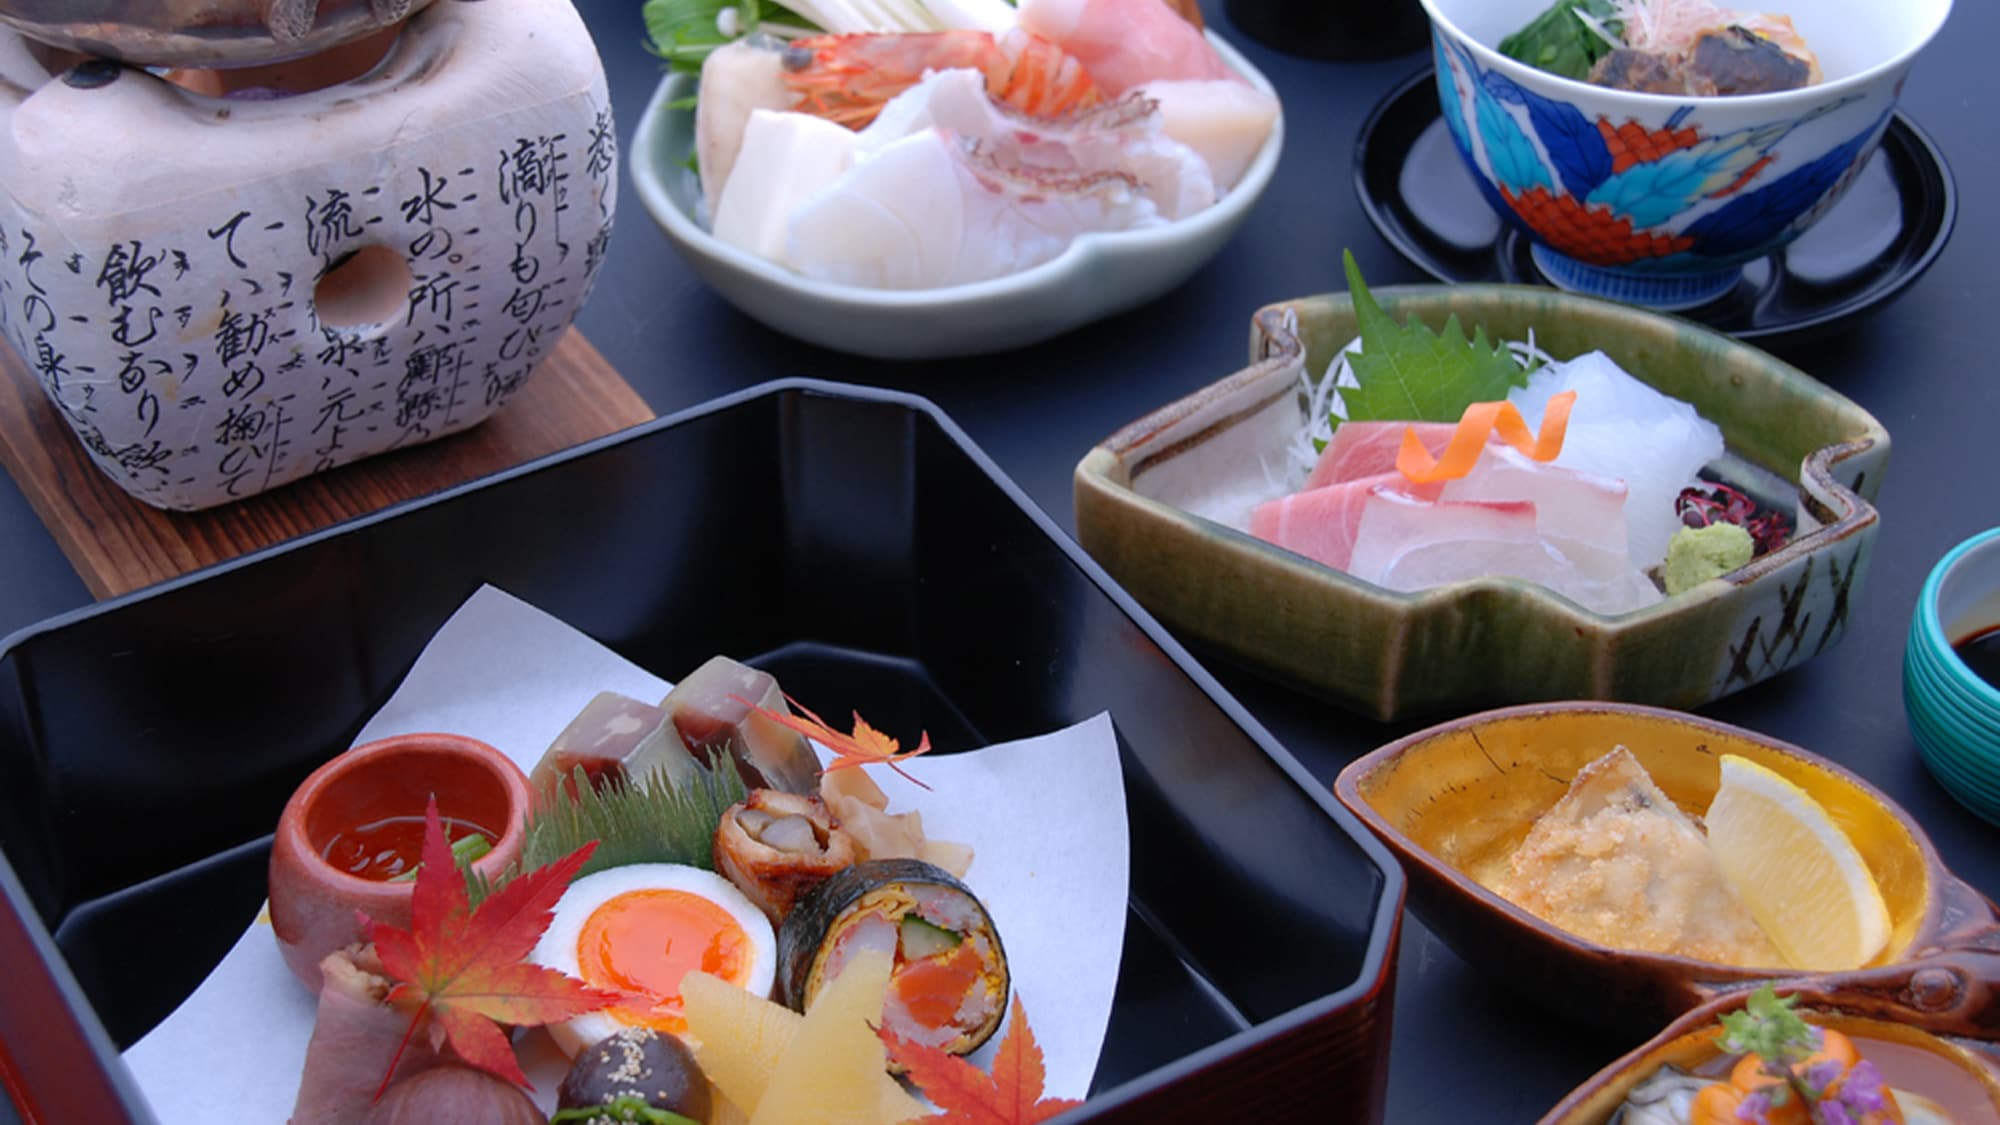 [Winter kaiseki] Please enjoy the kaiseki cuisine of Ogiya, where the master wields his skills.